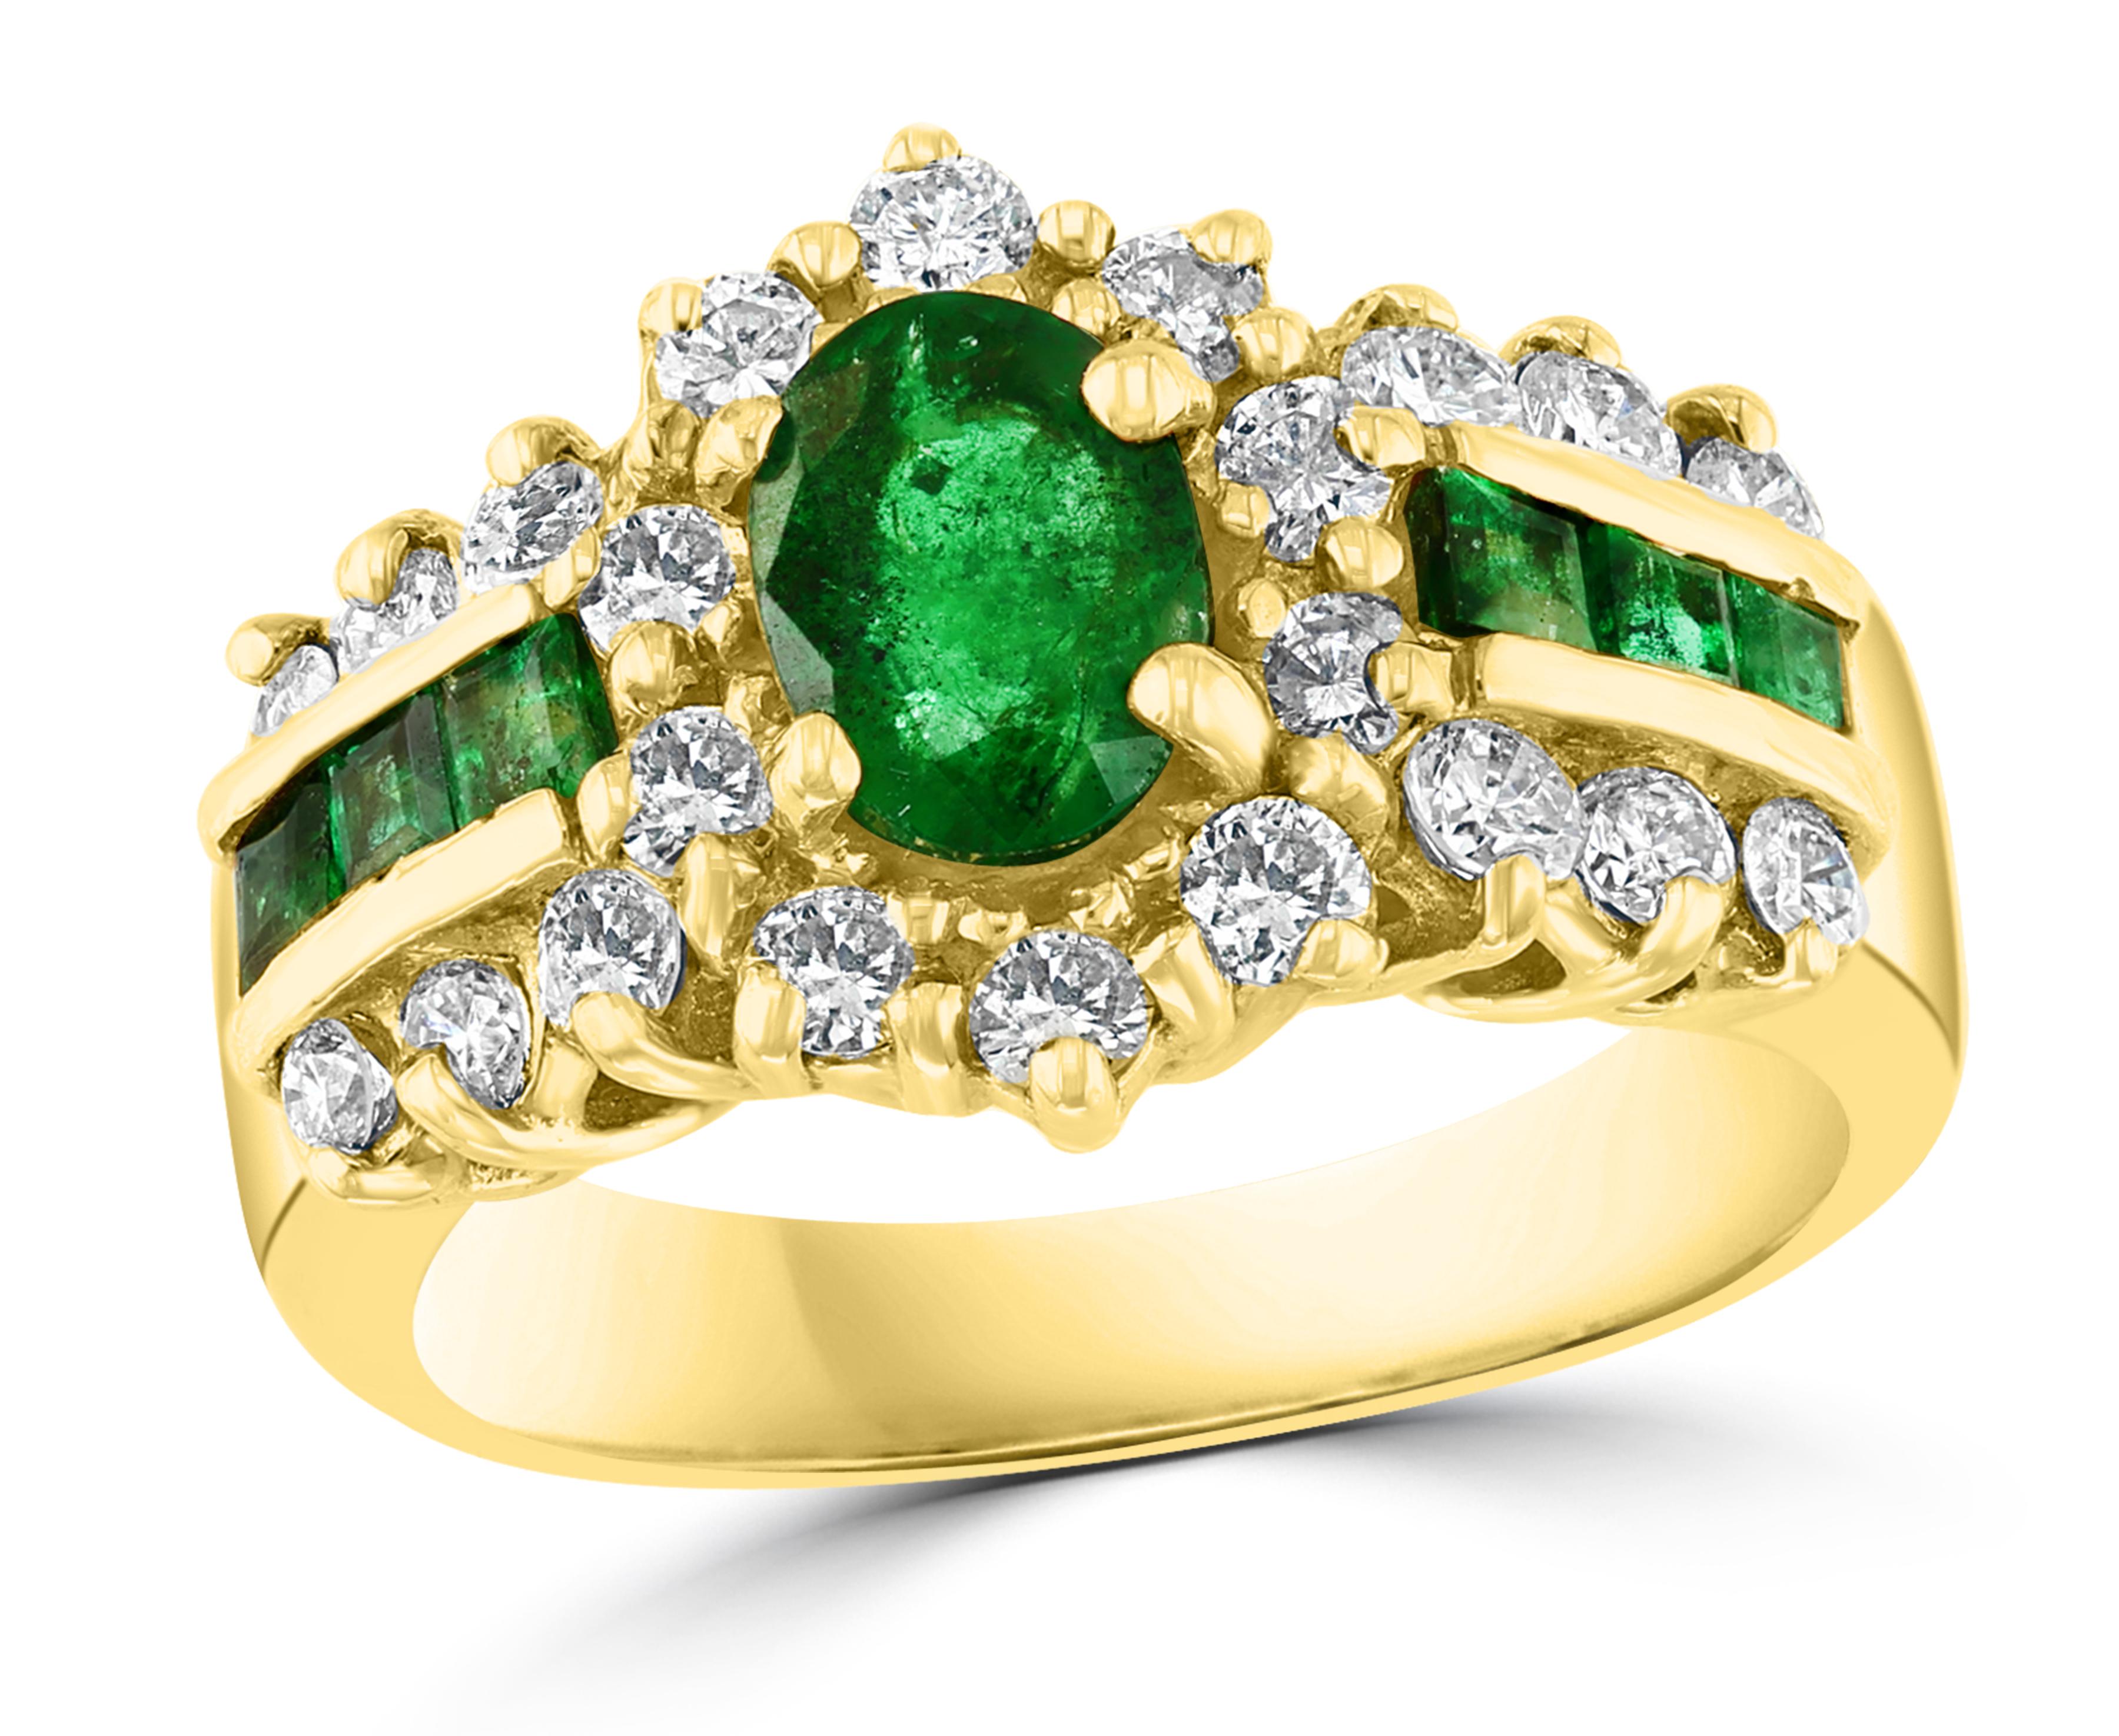 1 Carat Oval Cut Emerald and 1.0 Carat Diamond Ring 18 Karat Yellow Gold For Sale 8